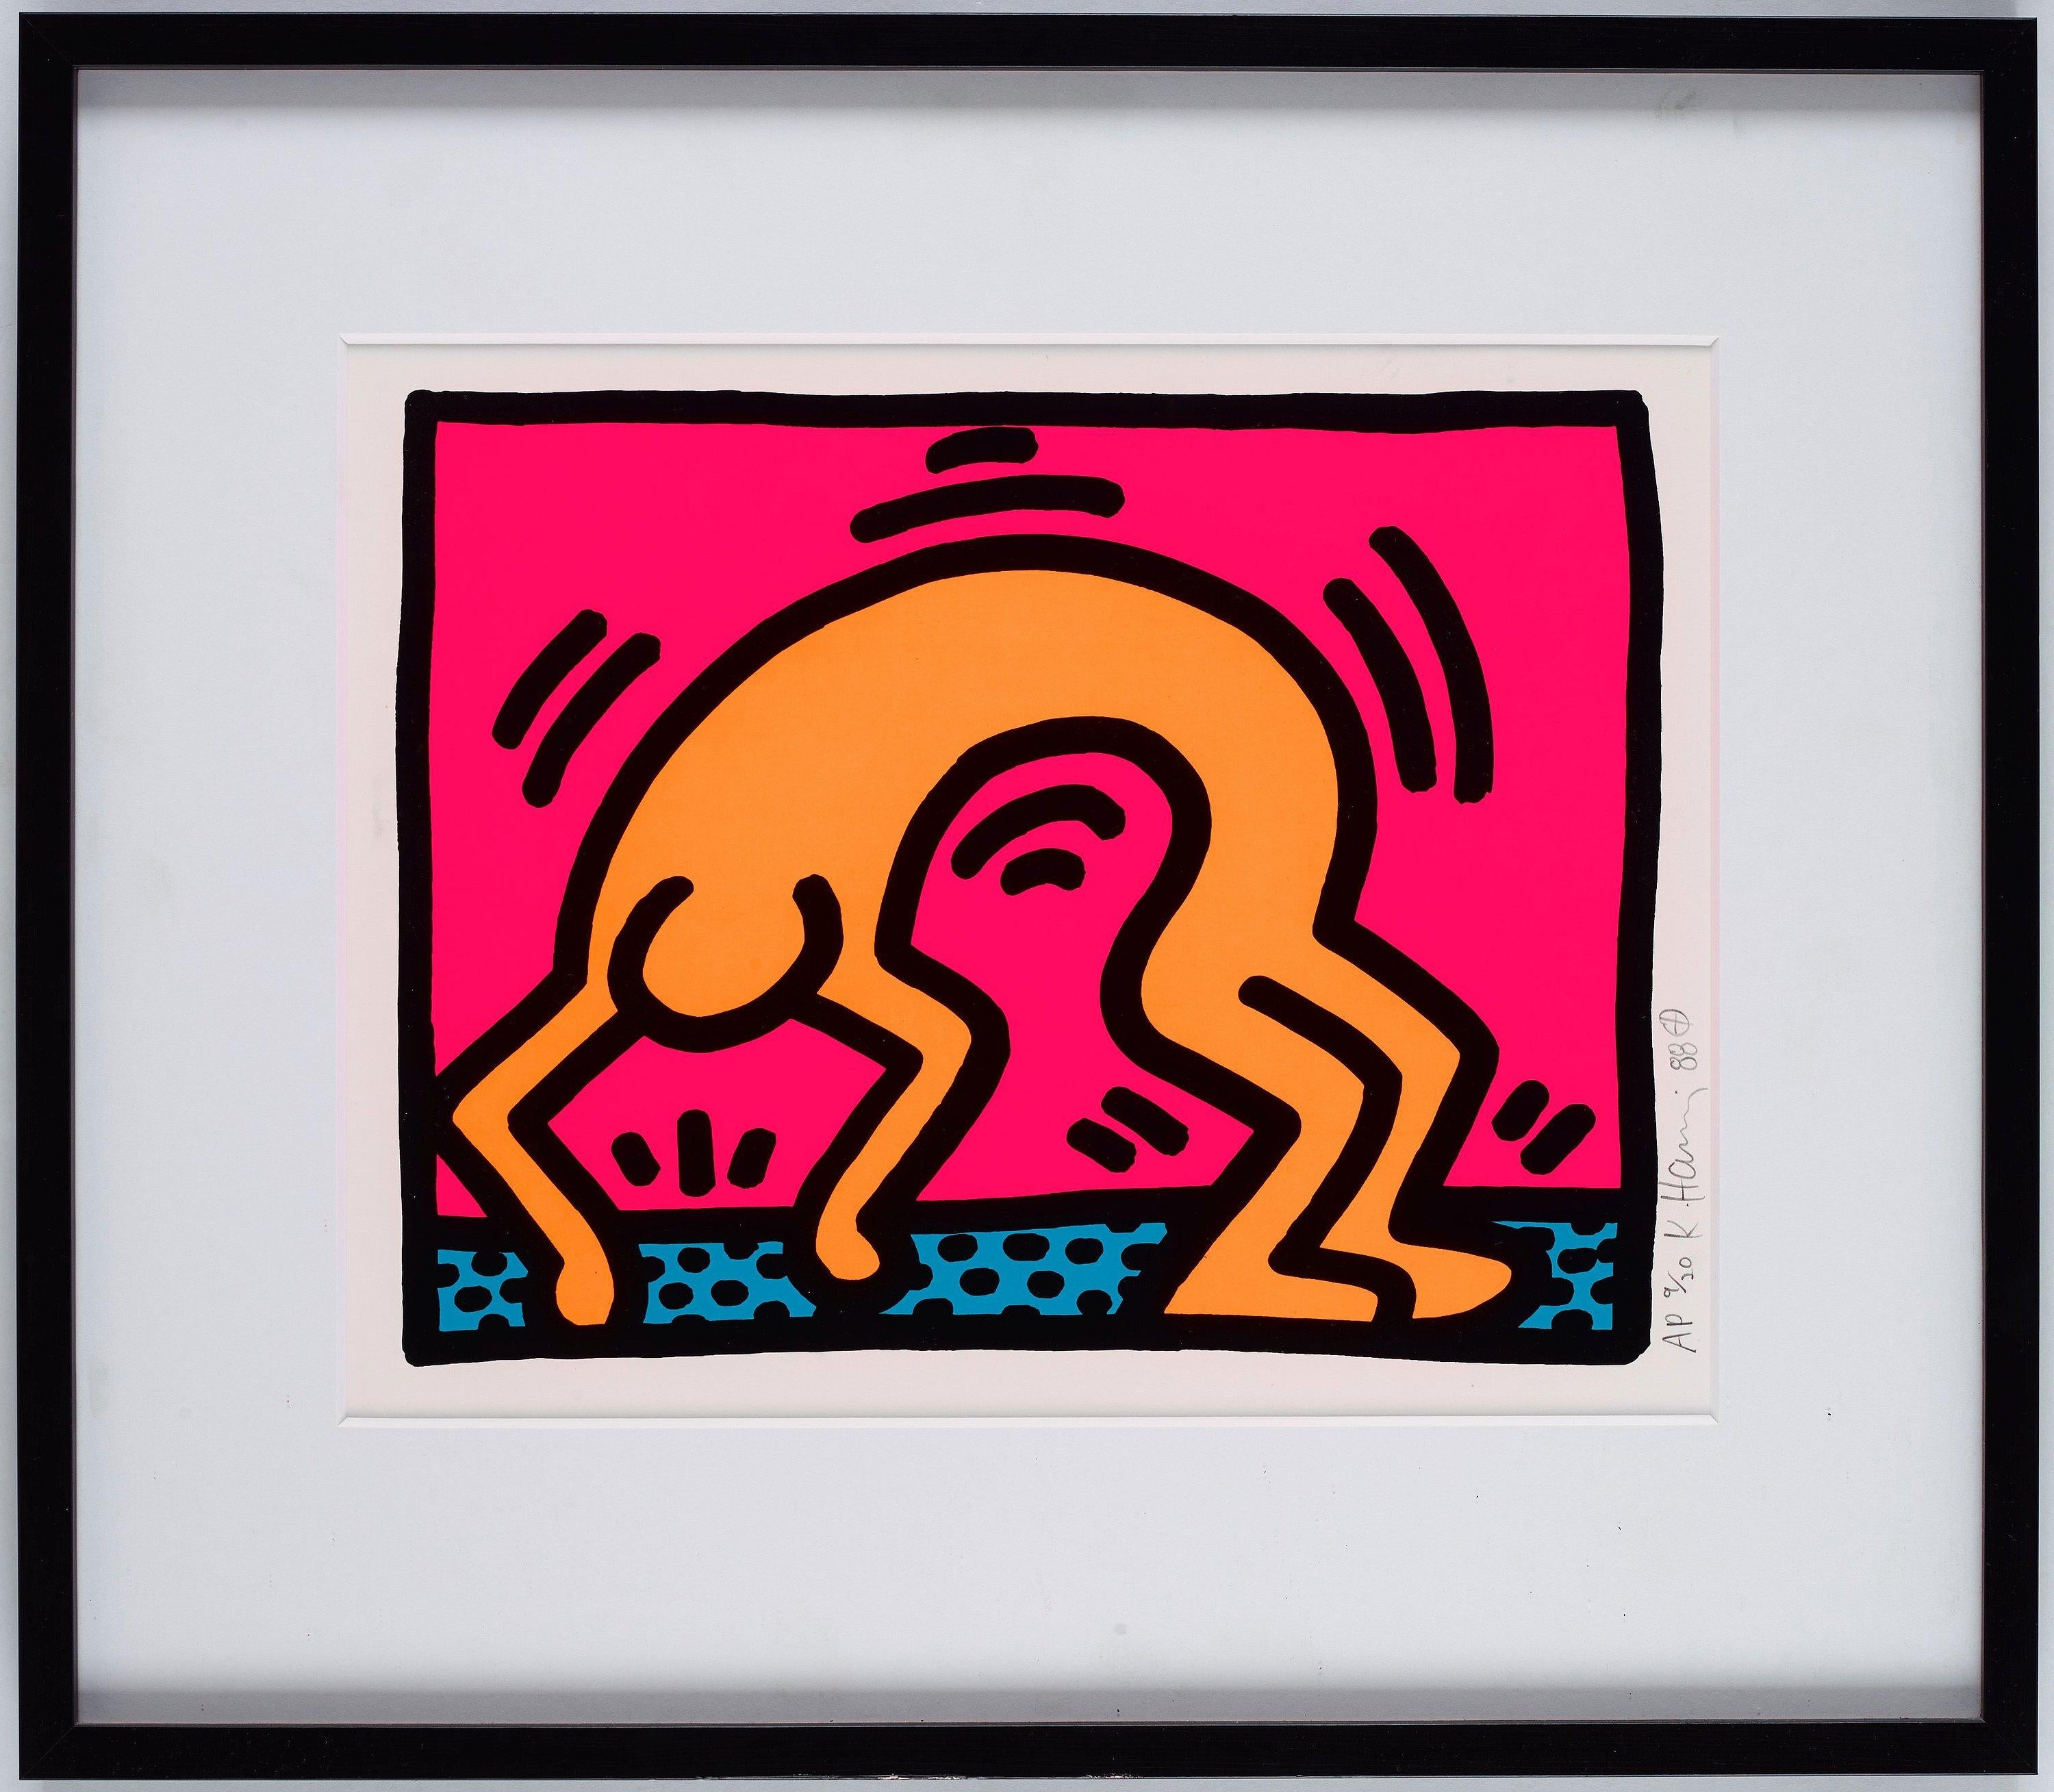 Pop Shop II (2) - Print by Keith Haring